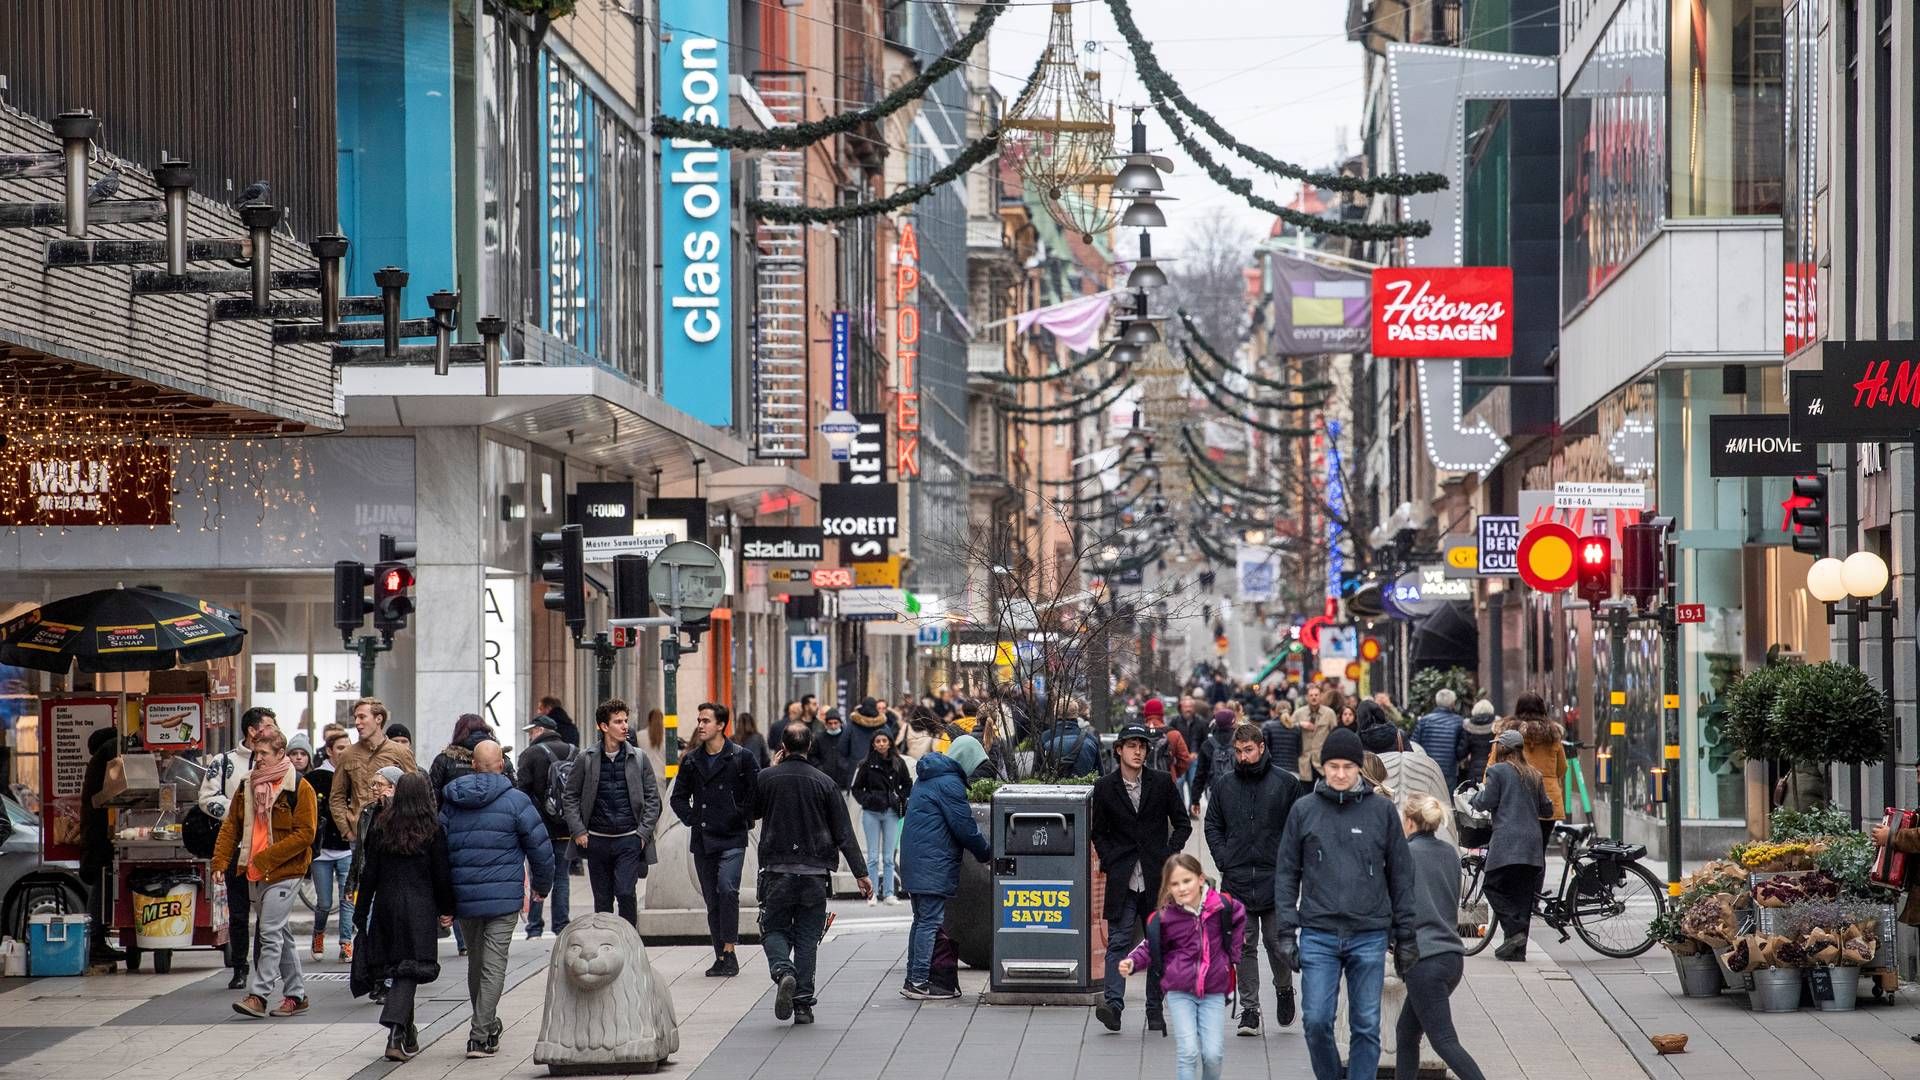 The shopping street Drottninggatan in central Stockholm. | Photo: TT News Agency/Reuters/Ritzau Scanpix